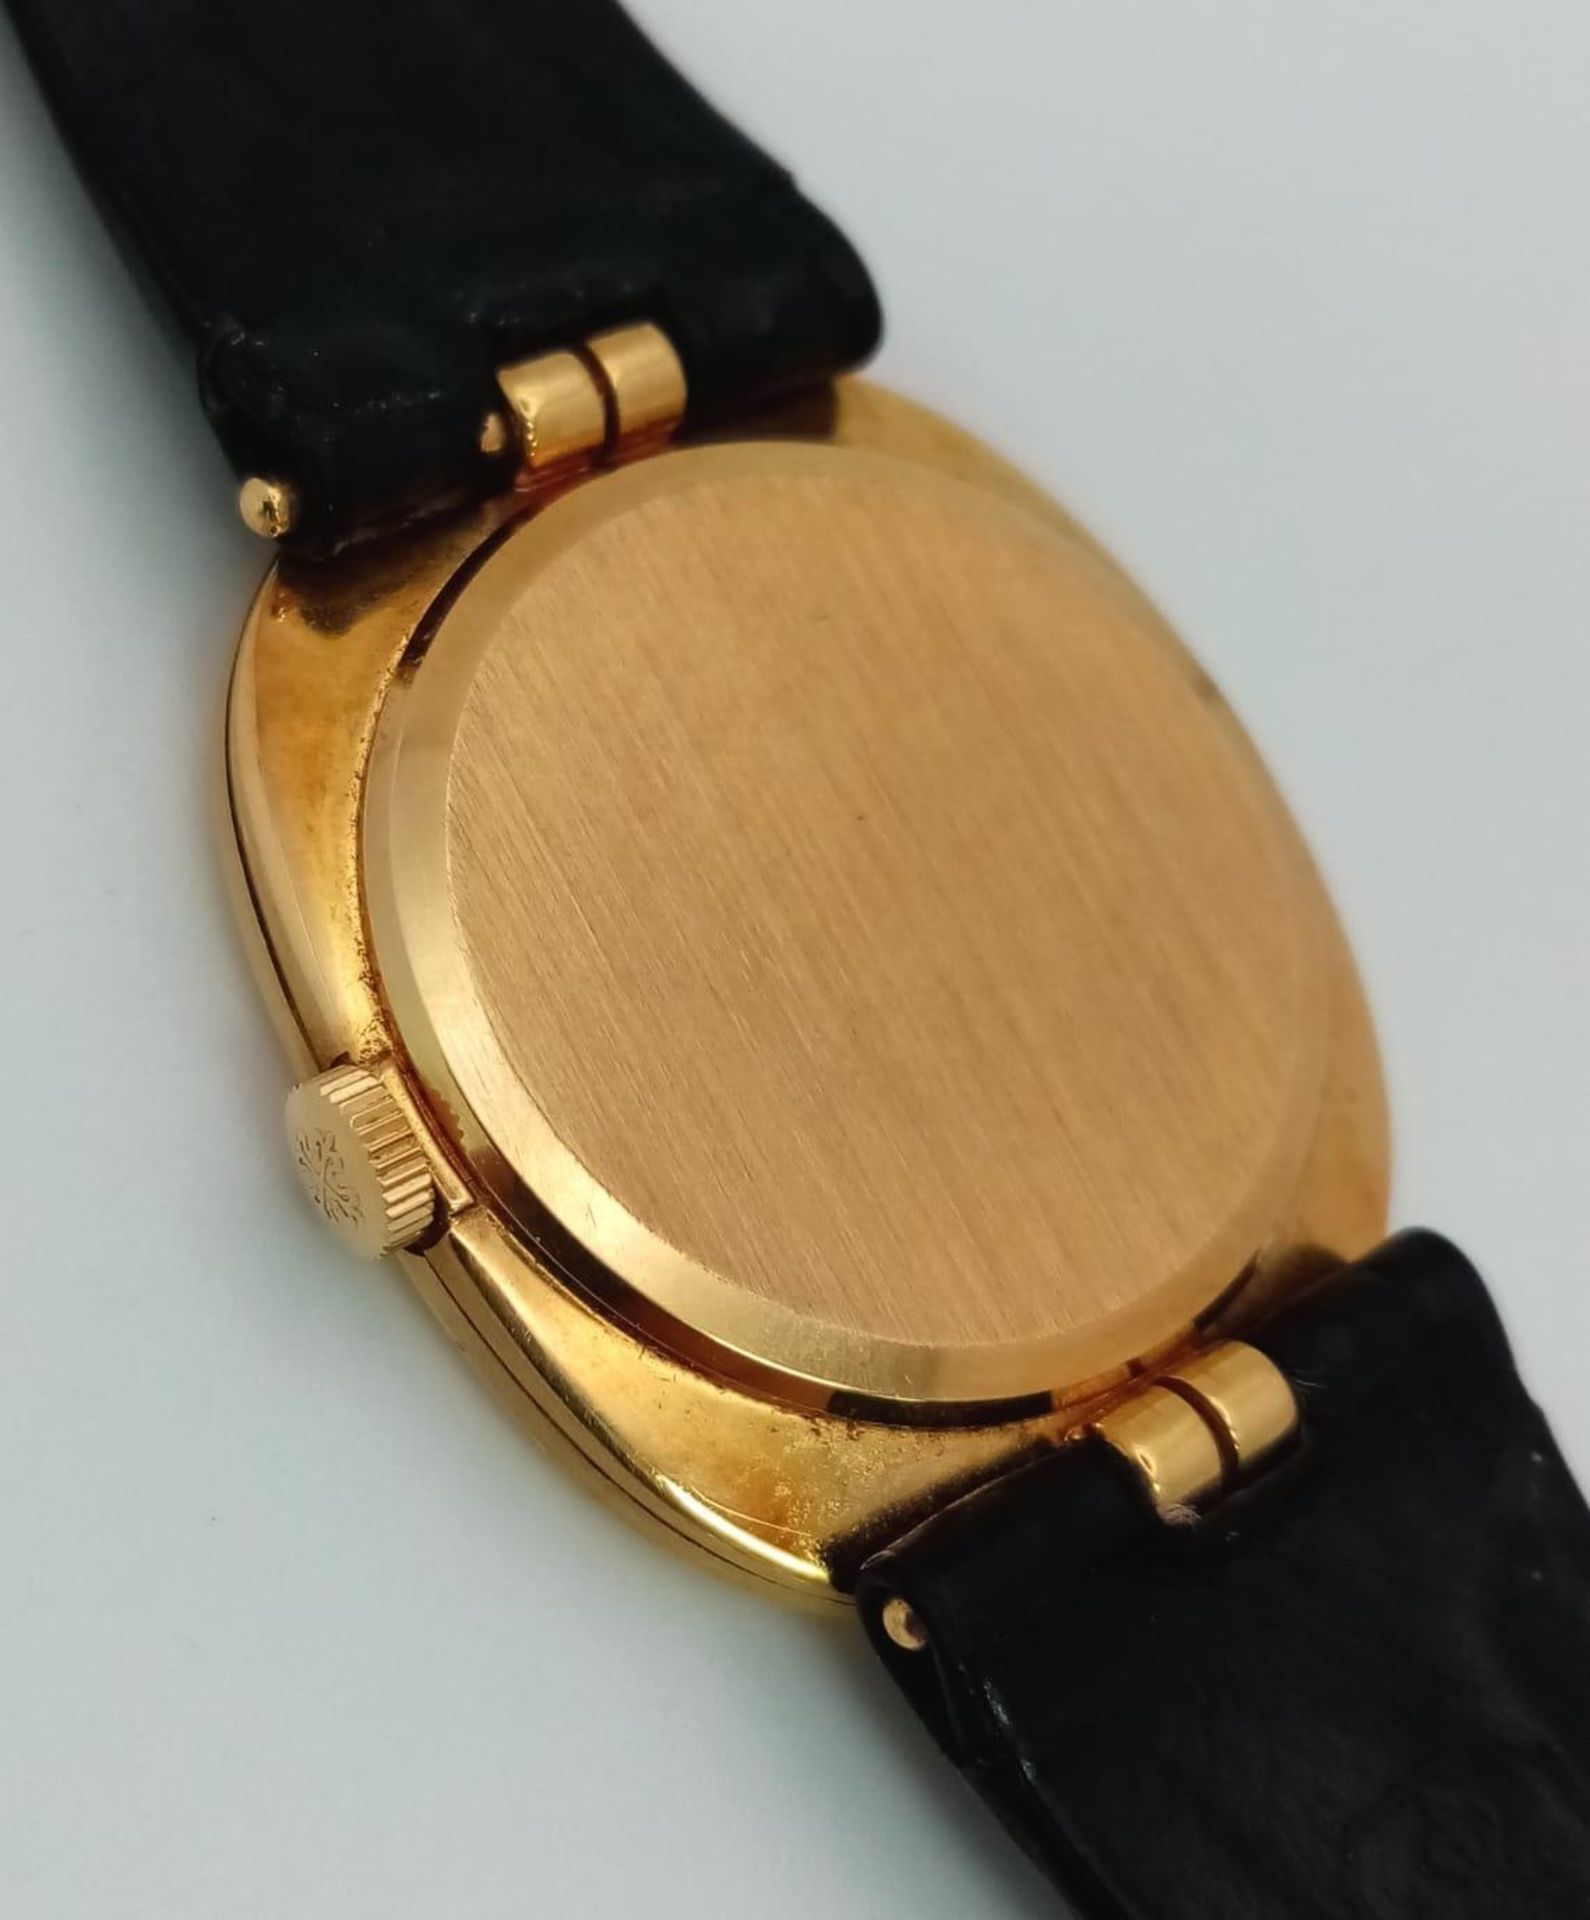 A Vintage Patek Phillipe 18K Gold Gents Watch. Original black leather strap with 18k gold buckle. - Image 6 of 8